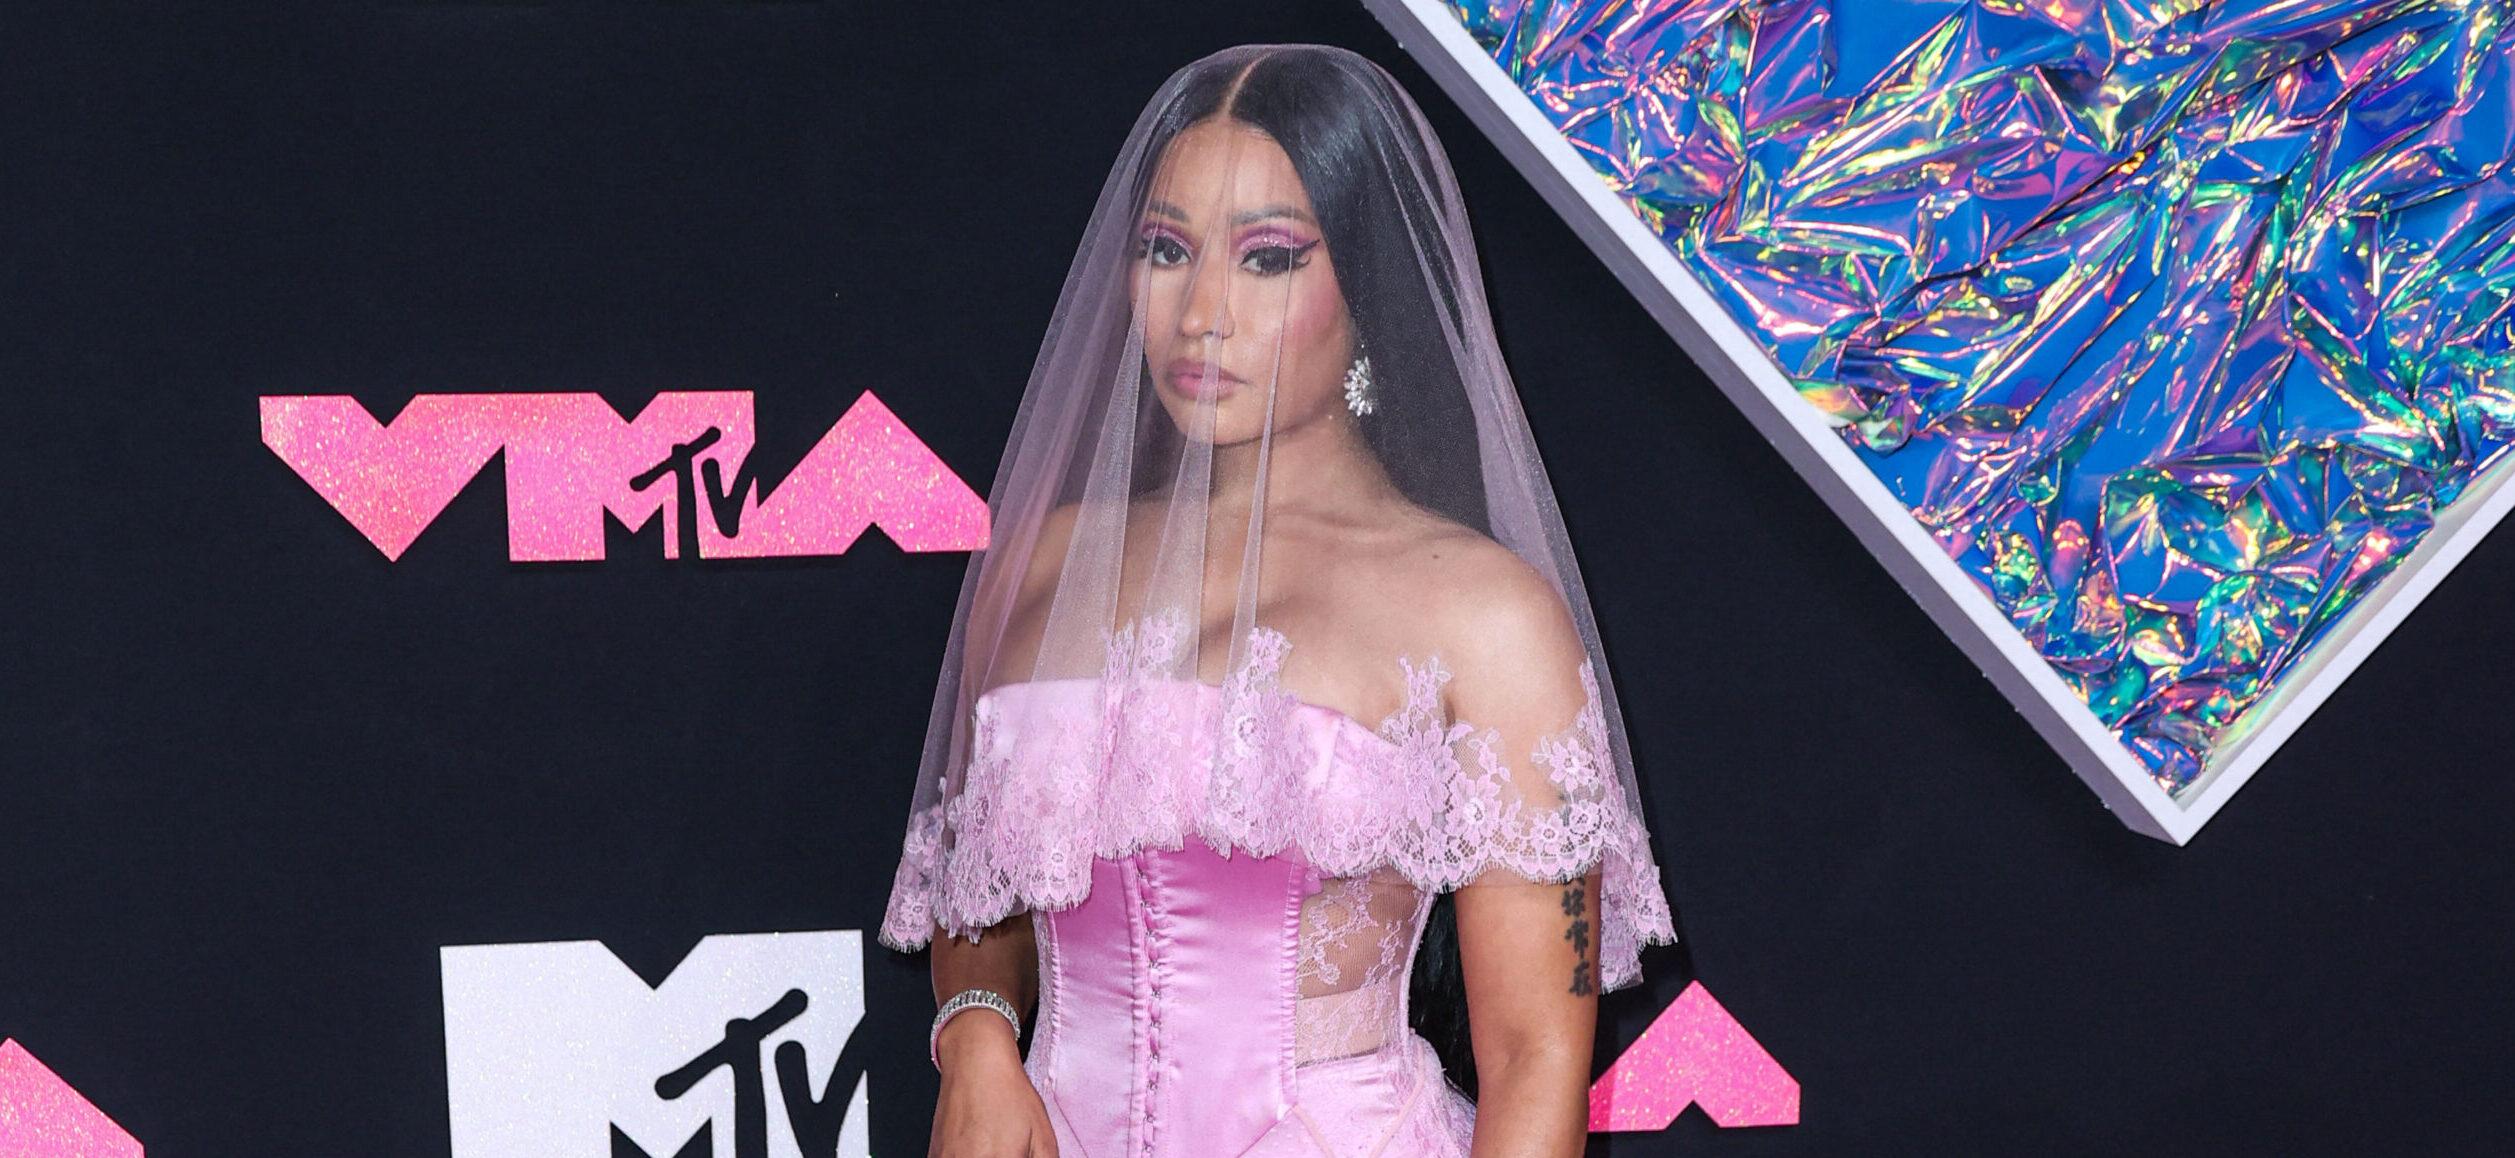 Nicki Minaj Lawsuit Over Alleged Damaged Jewelry Dismissed